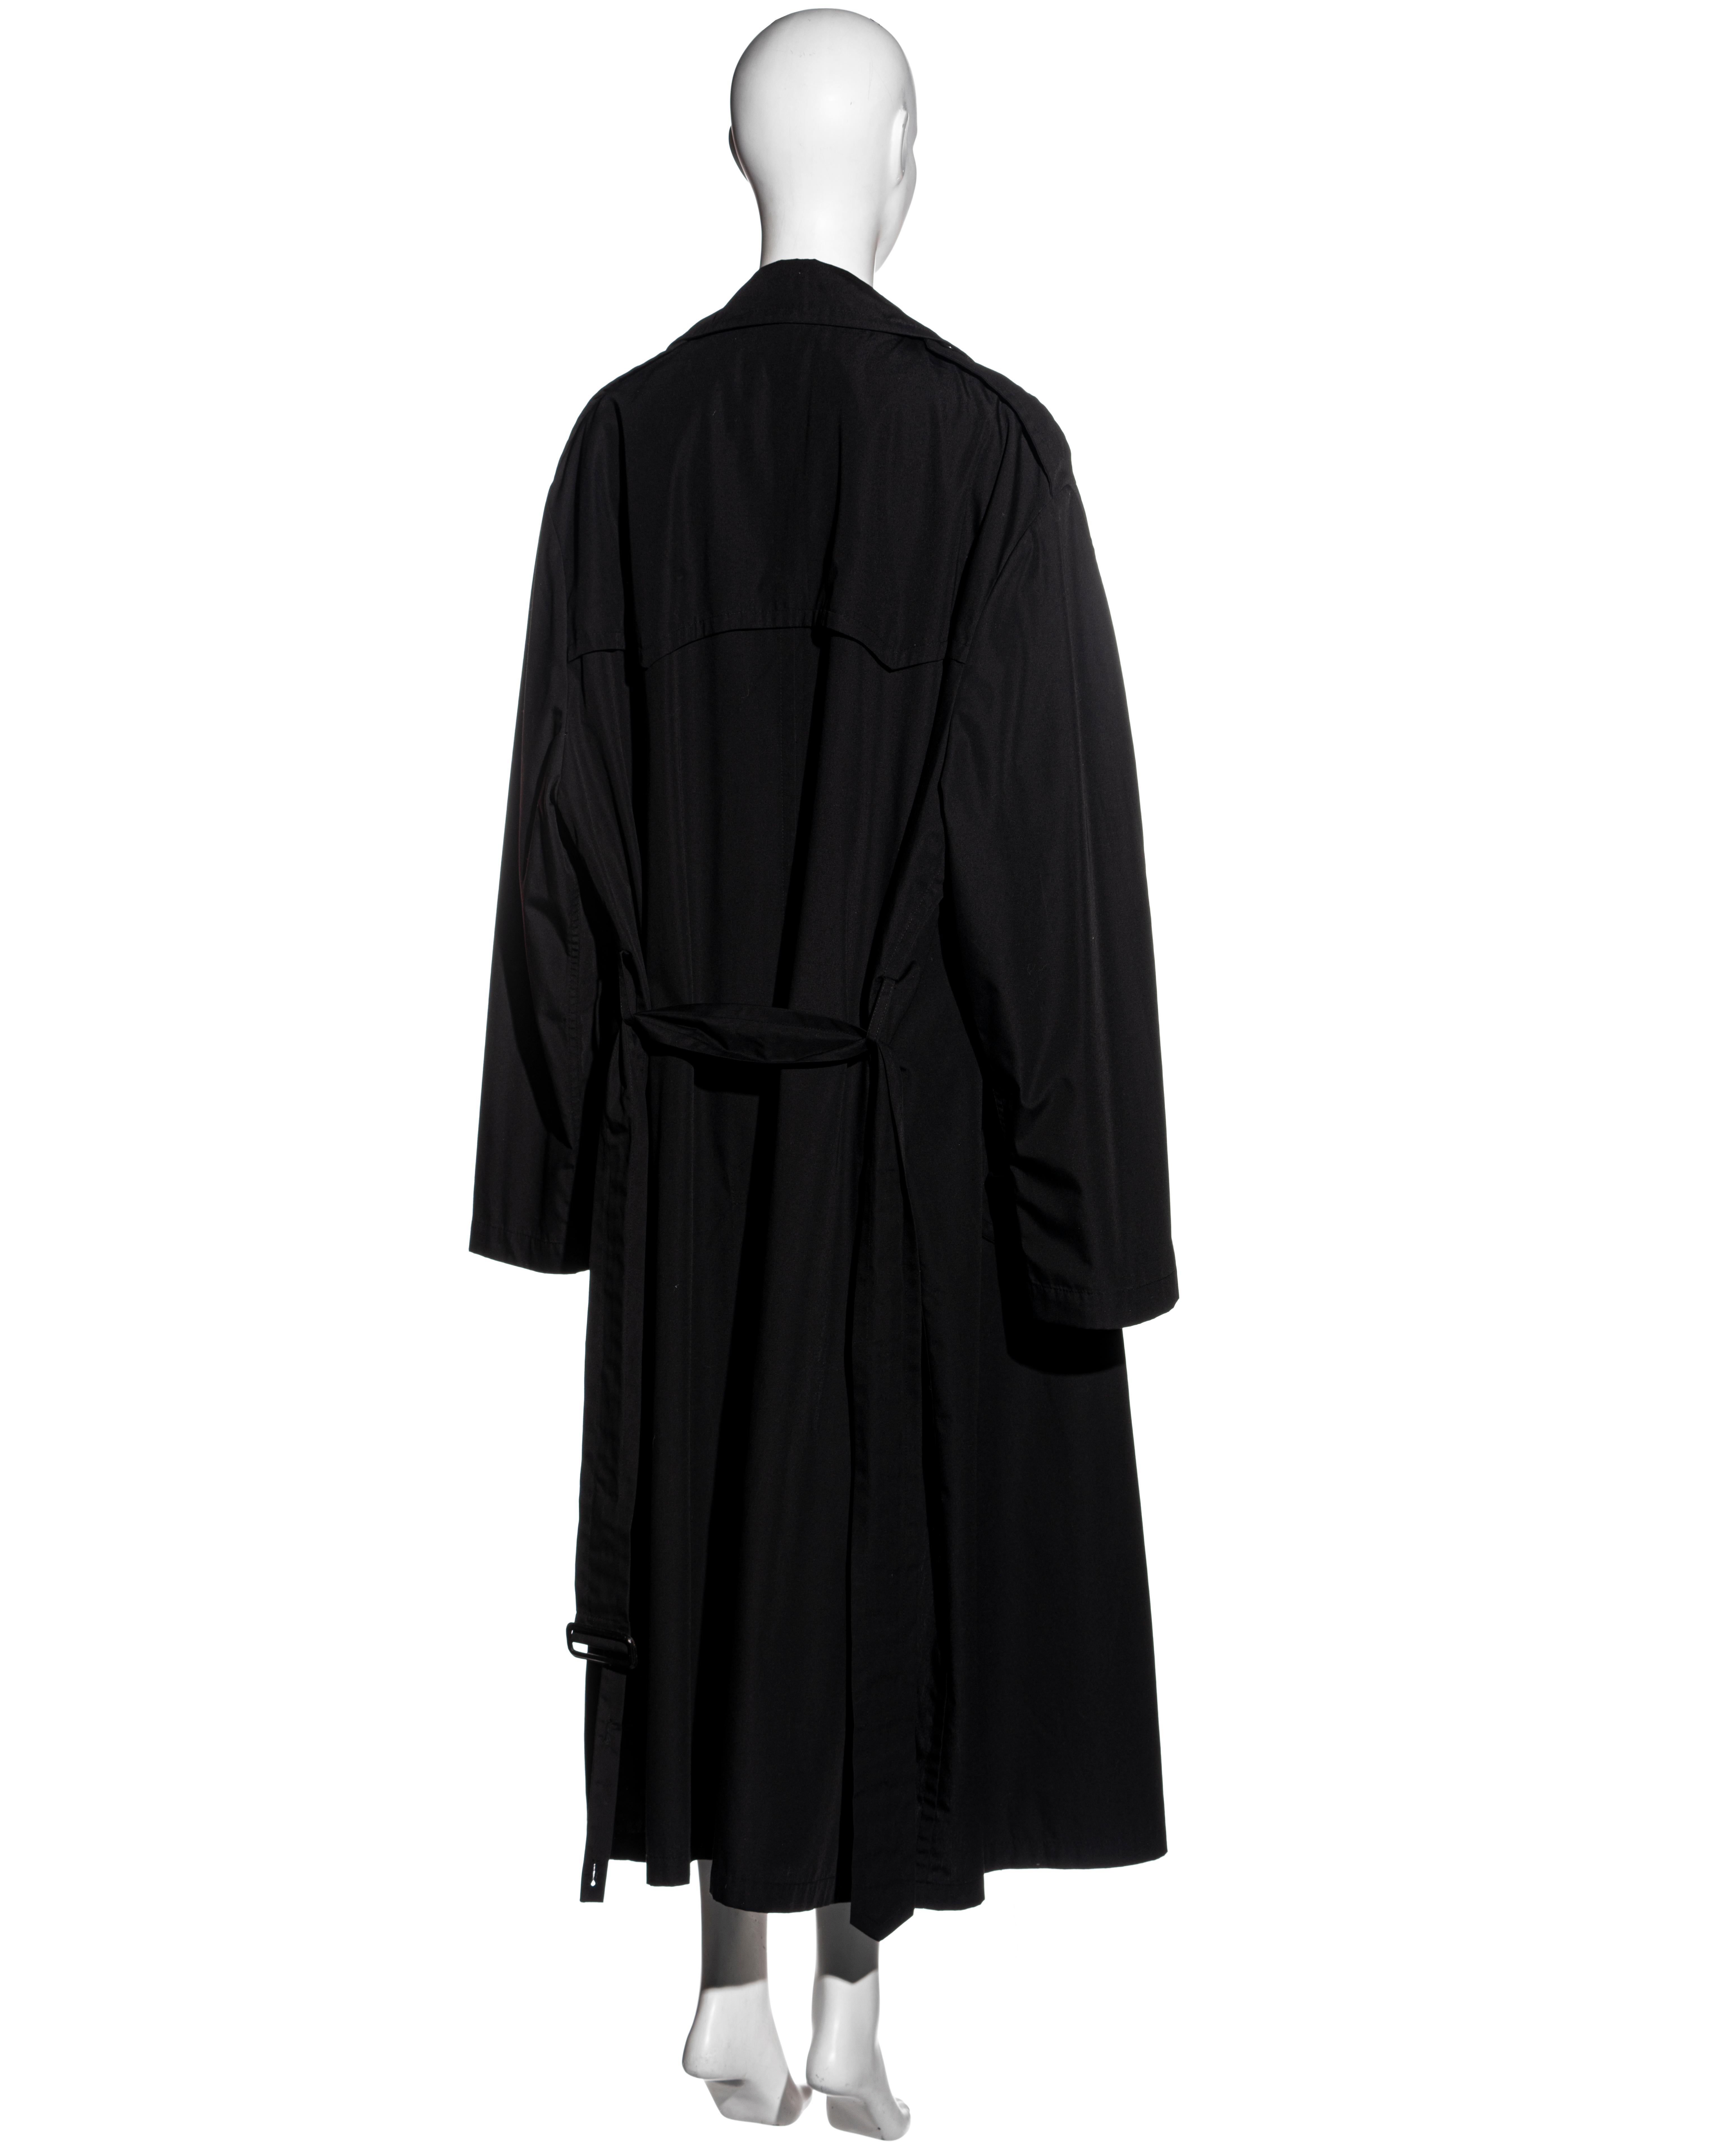 Martin Margiela black oversized size 74 trench coat, ss 2000 For Sale 4